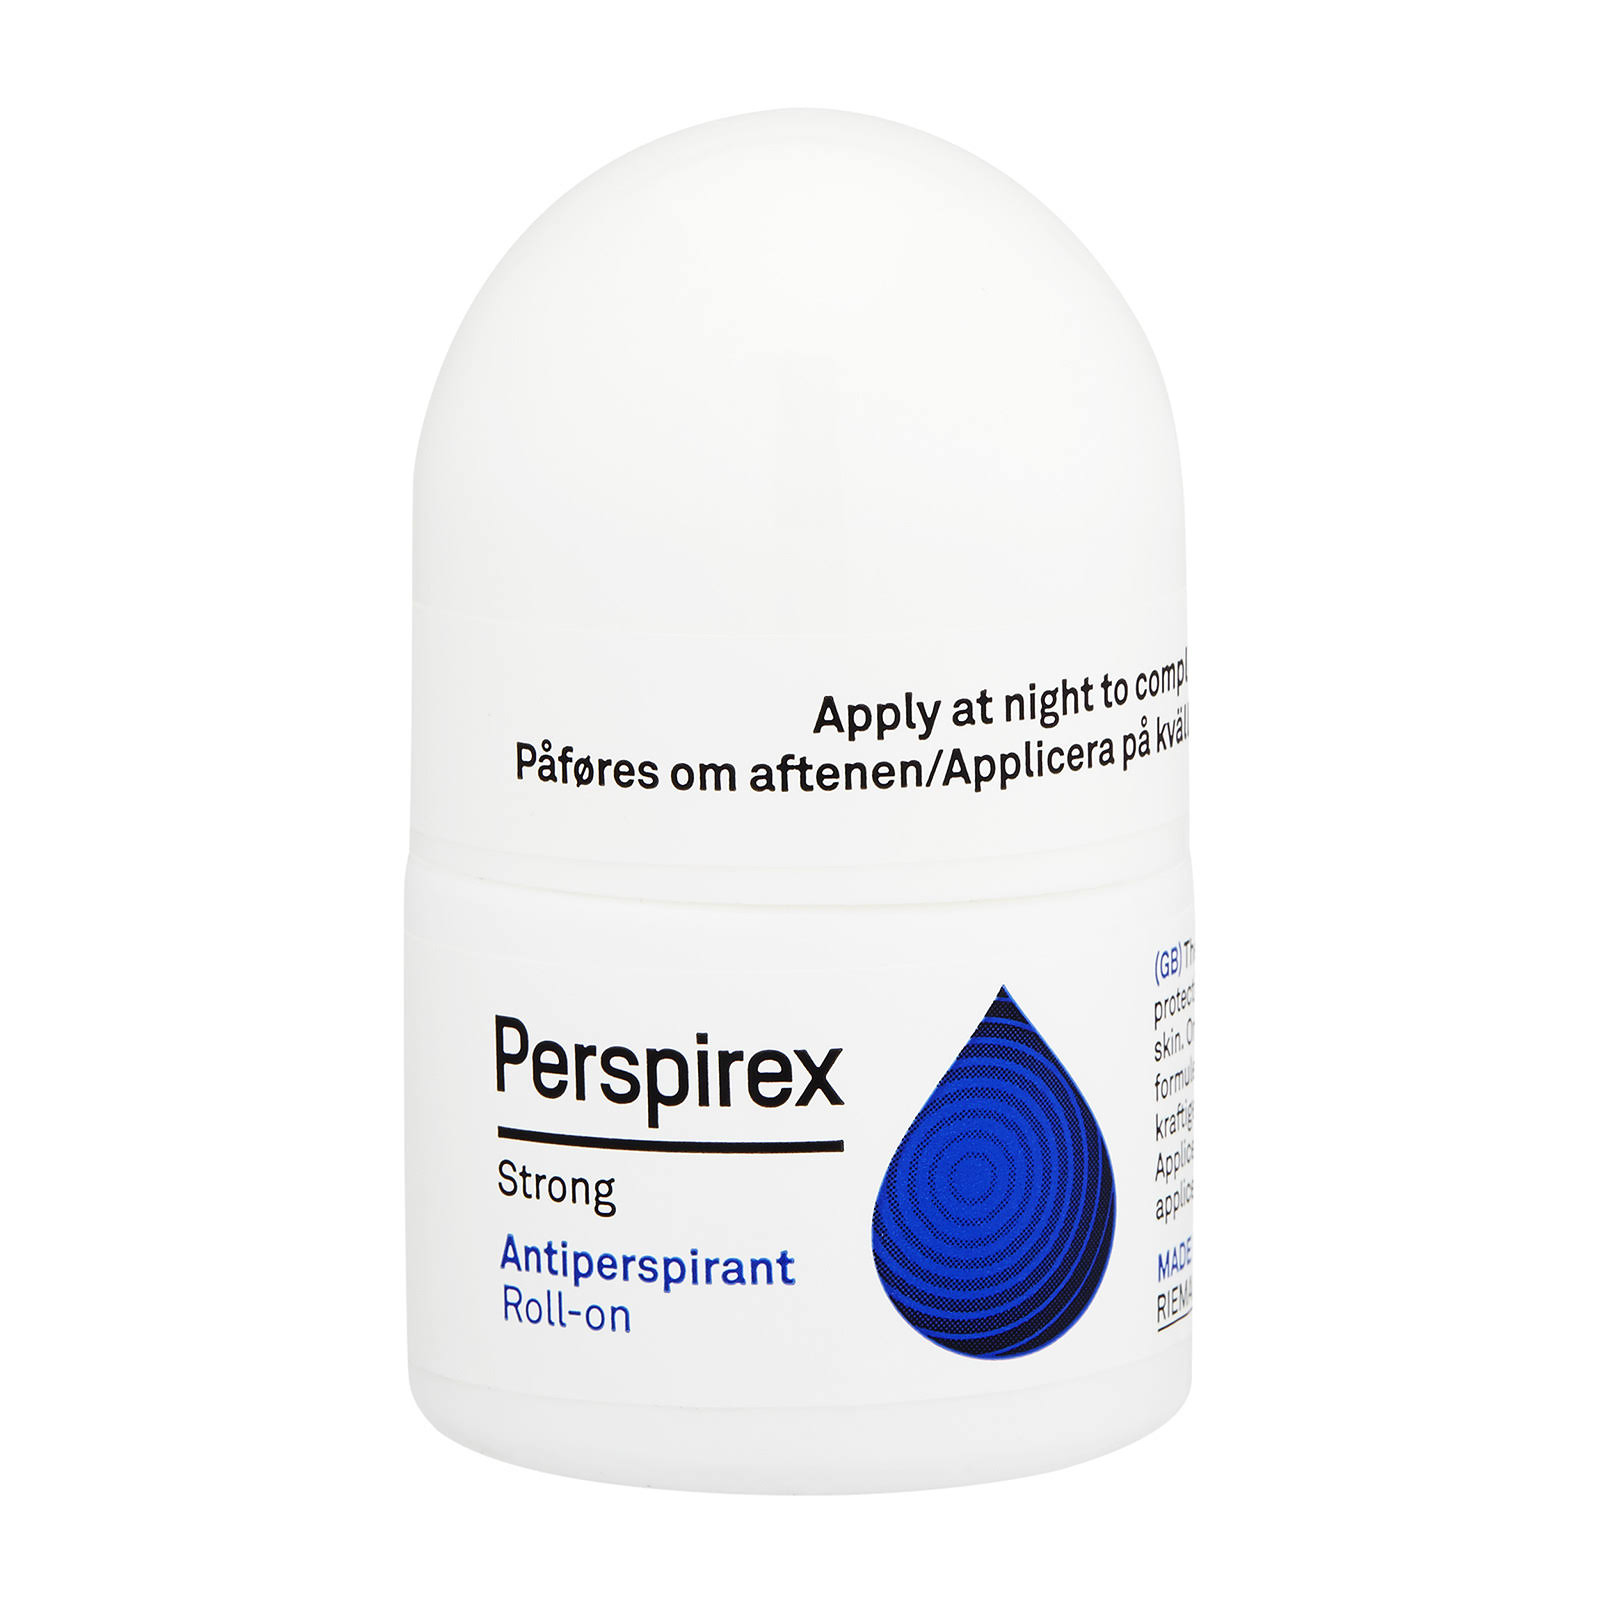 Perspirex Antiperspirant Roll on 20ml - Strong